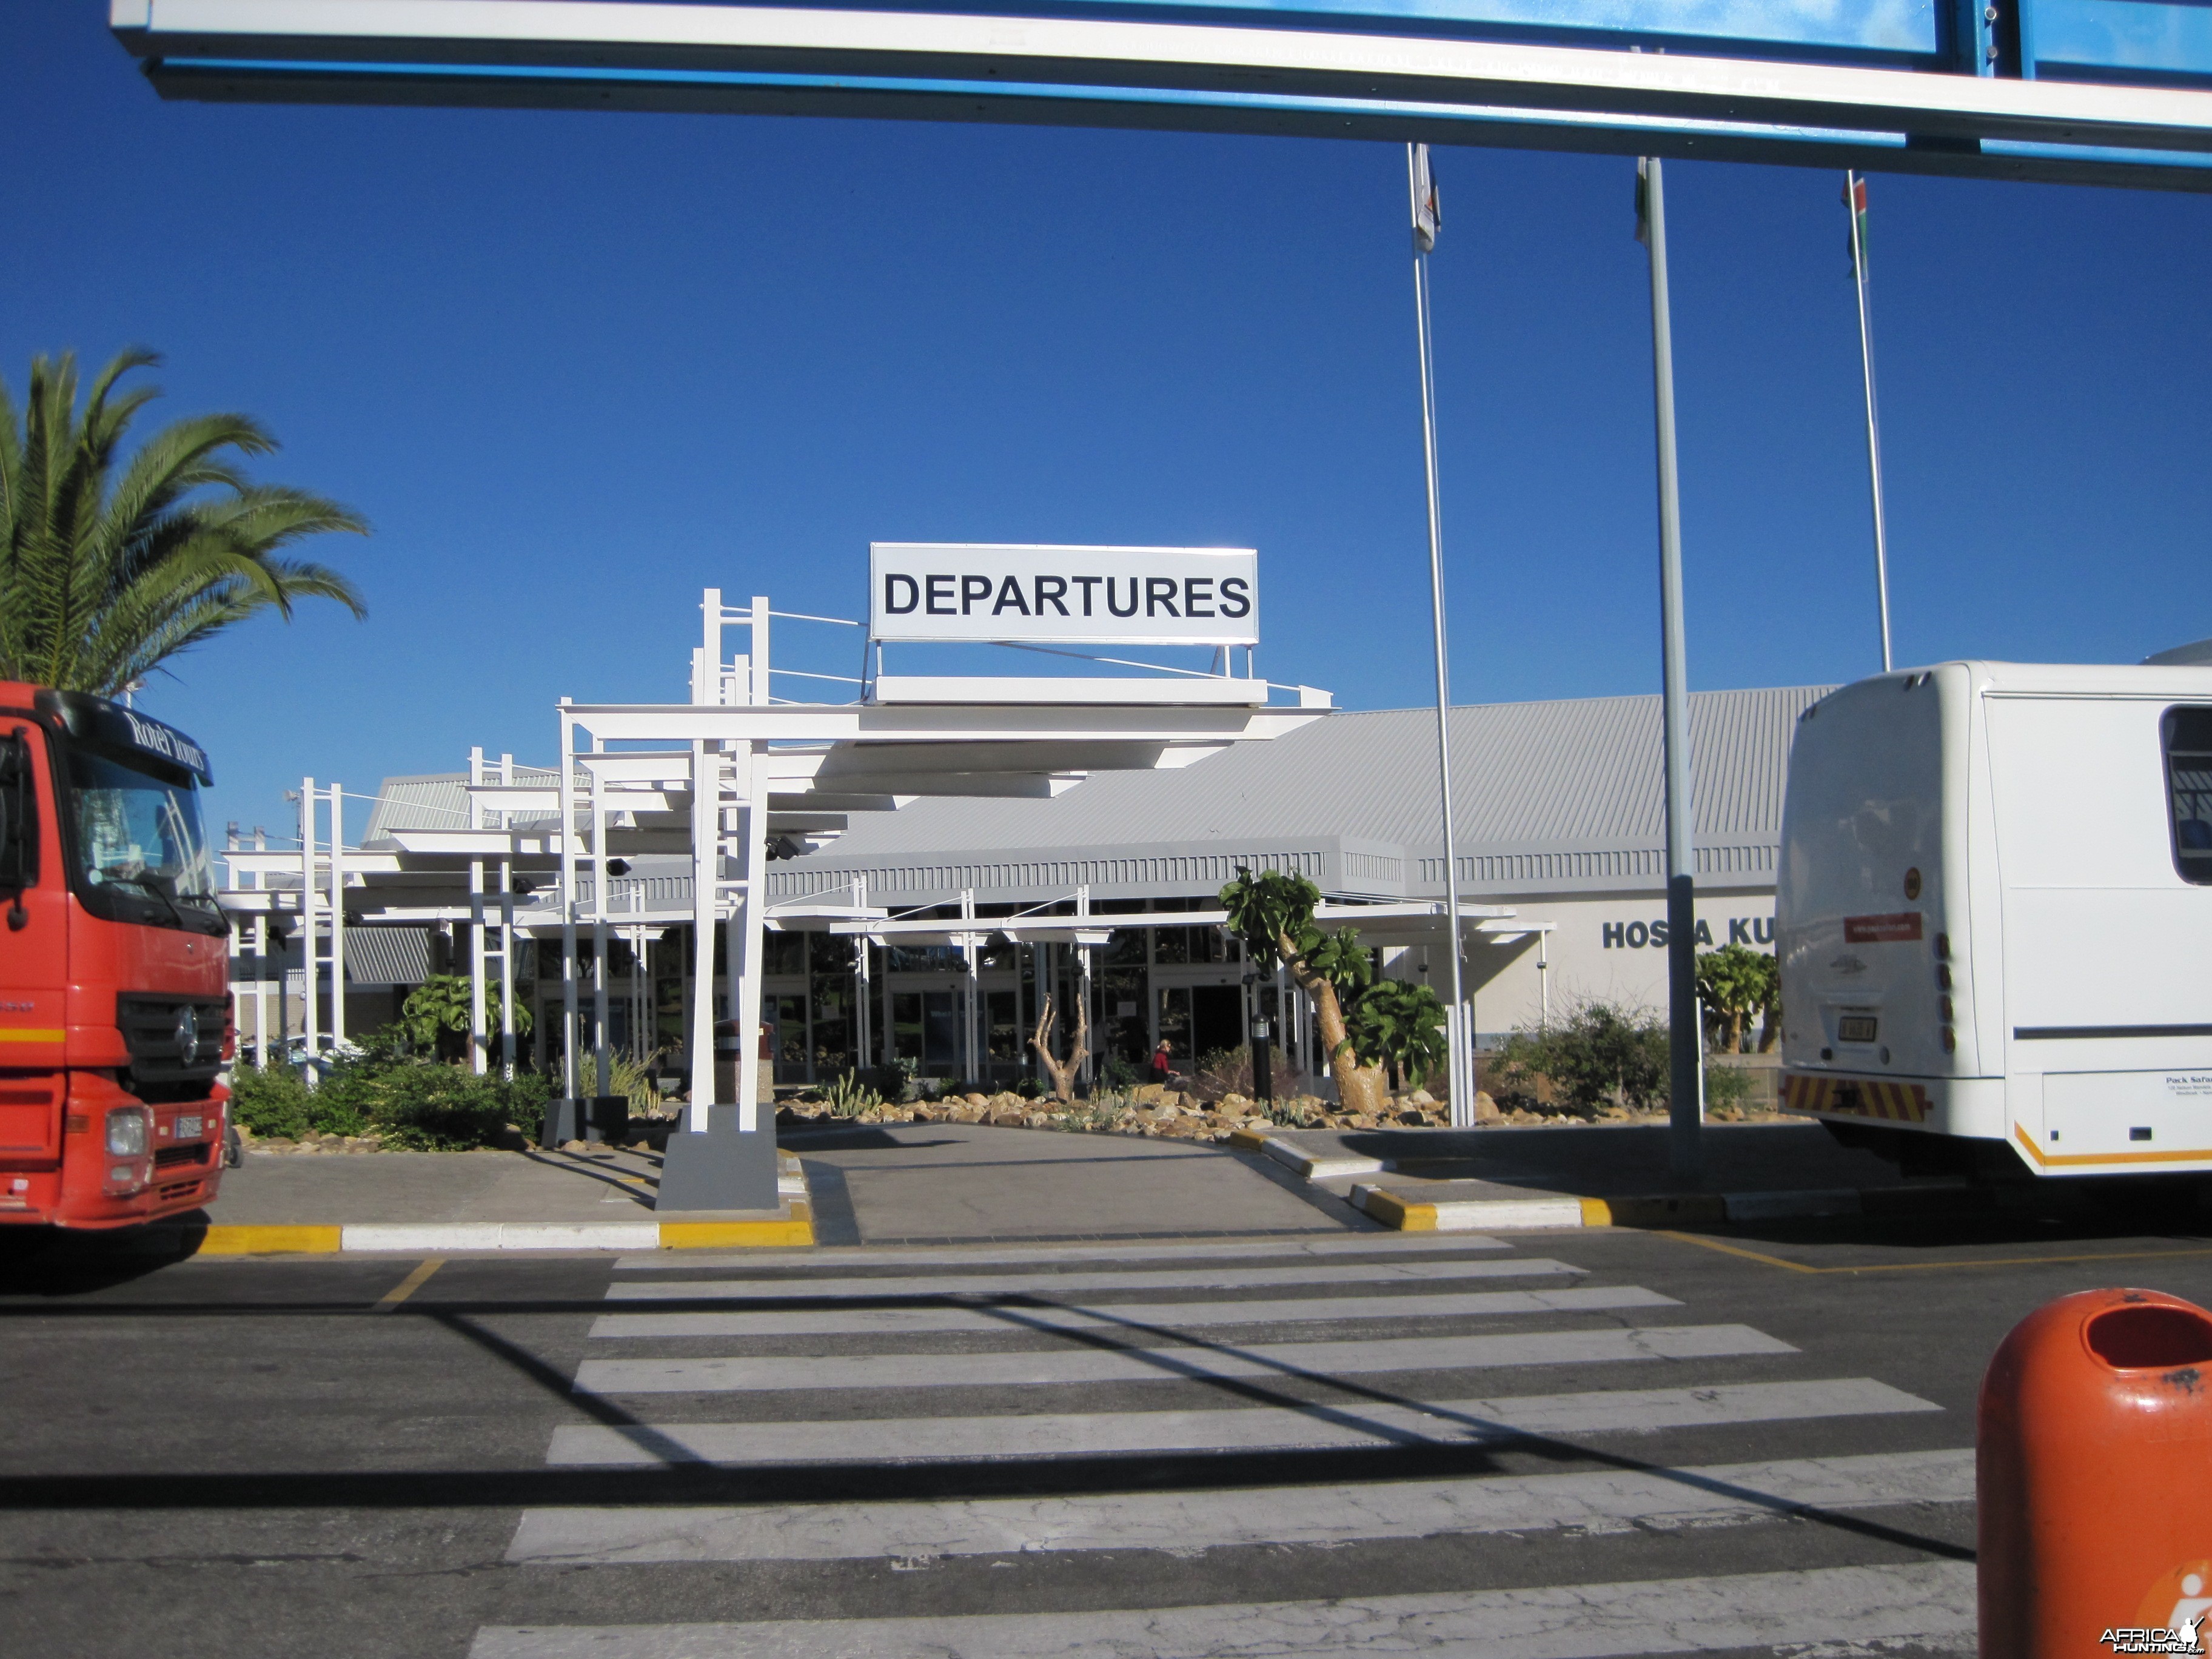 Departures at the International Airport in Windhoek, Namibia